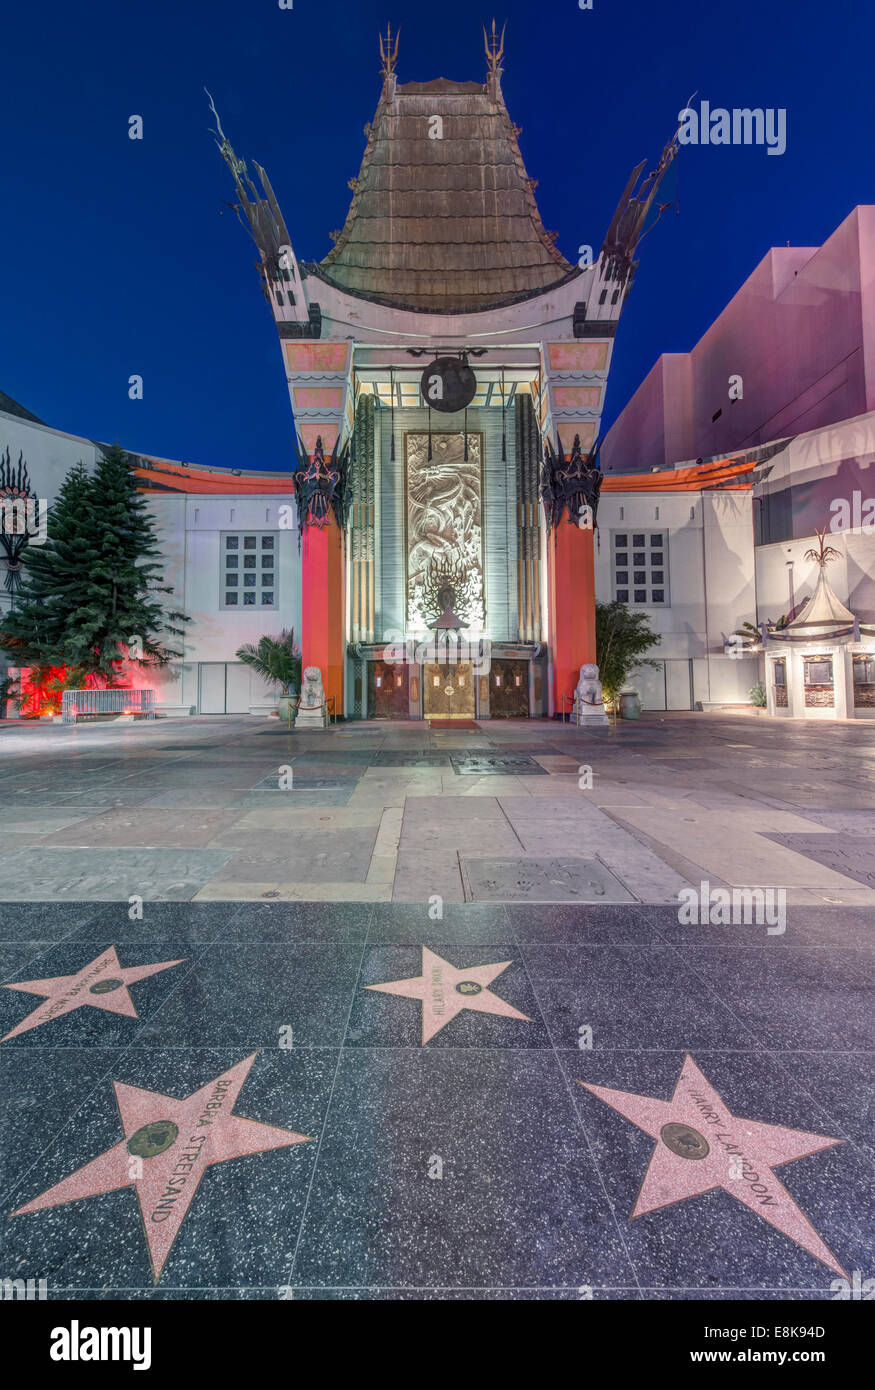 USA, Californie, Los Angeles, Hollywood, le Grauman's Chinese Theatre à l'aube (grand format formats disponibles) Banque D'Images